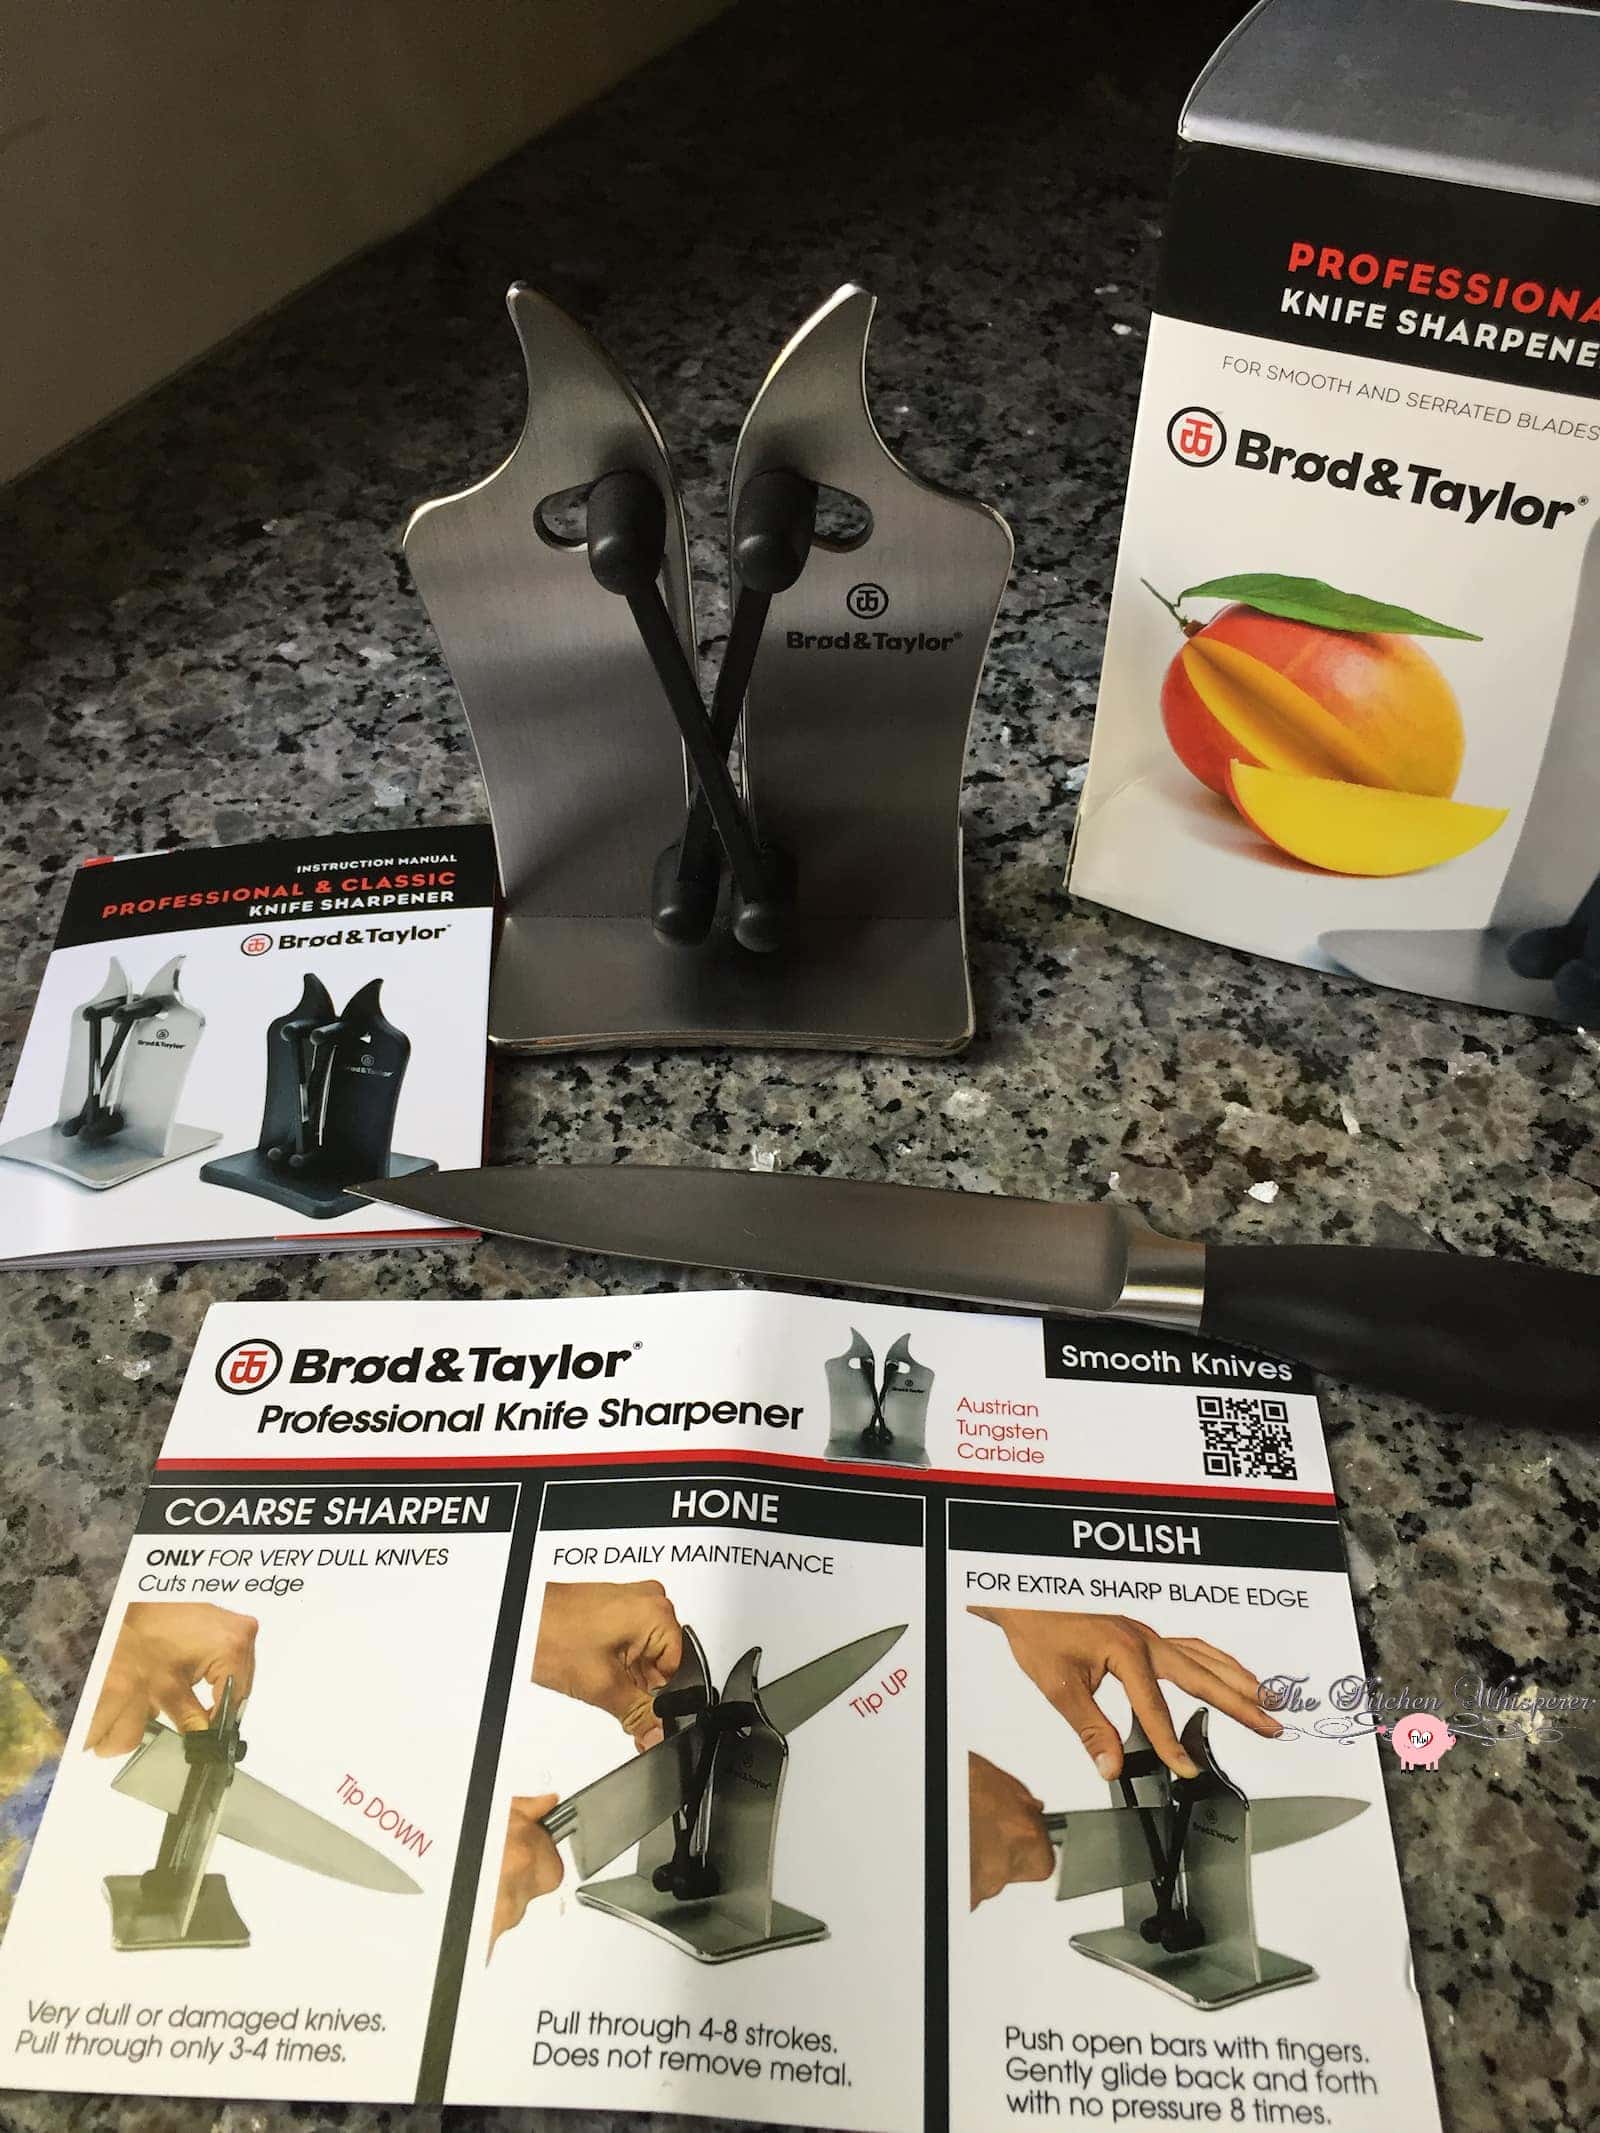  Brod & Taylor Classic Knife Sharpener